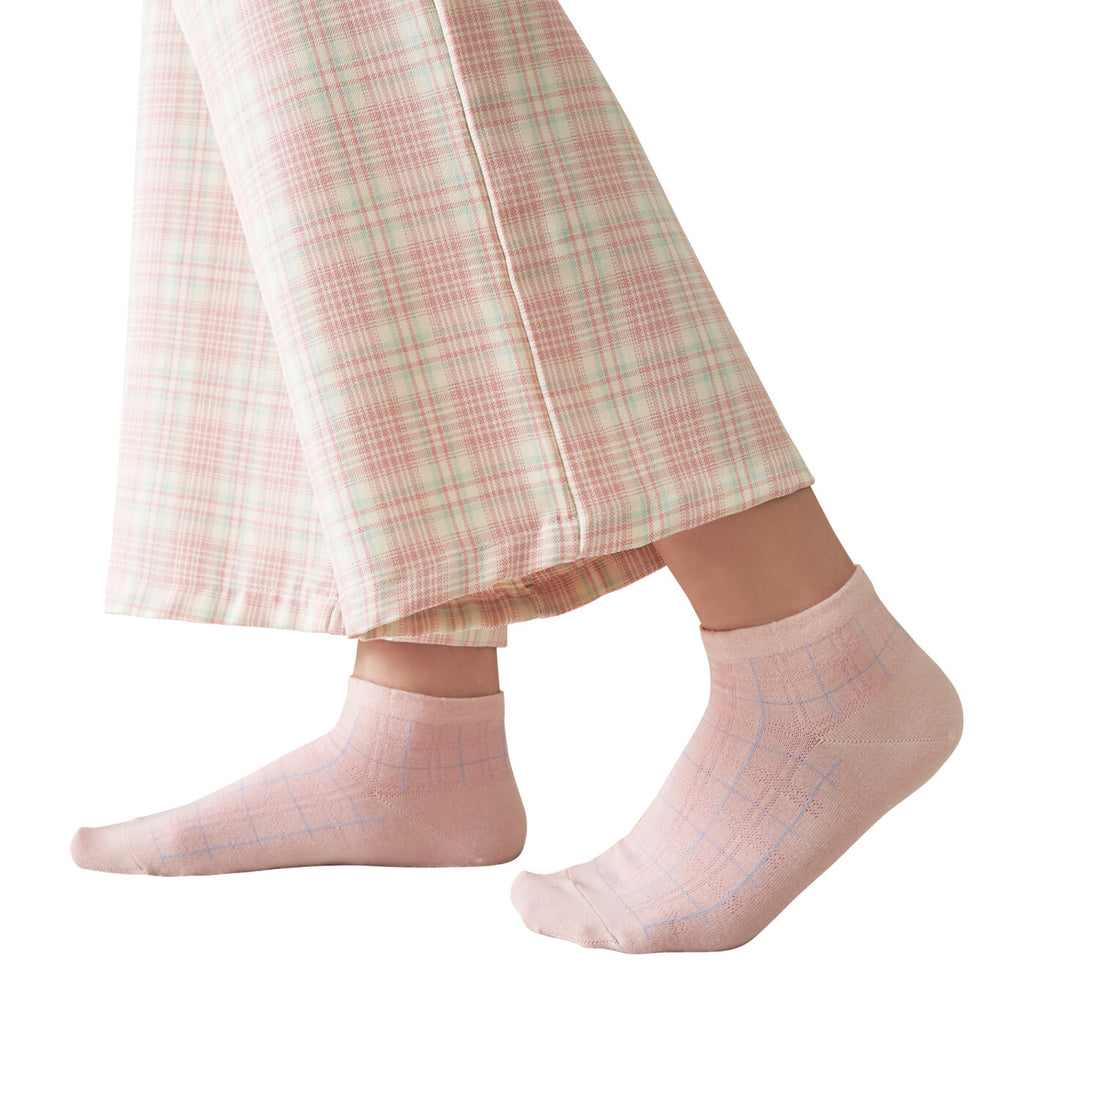 Short Socks Premium Cotton Socks Selected by Wacoal Set 3 pcs Model WW110300 Carnation Pink (CP)